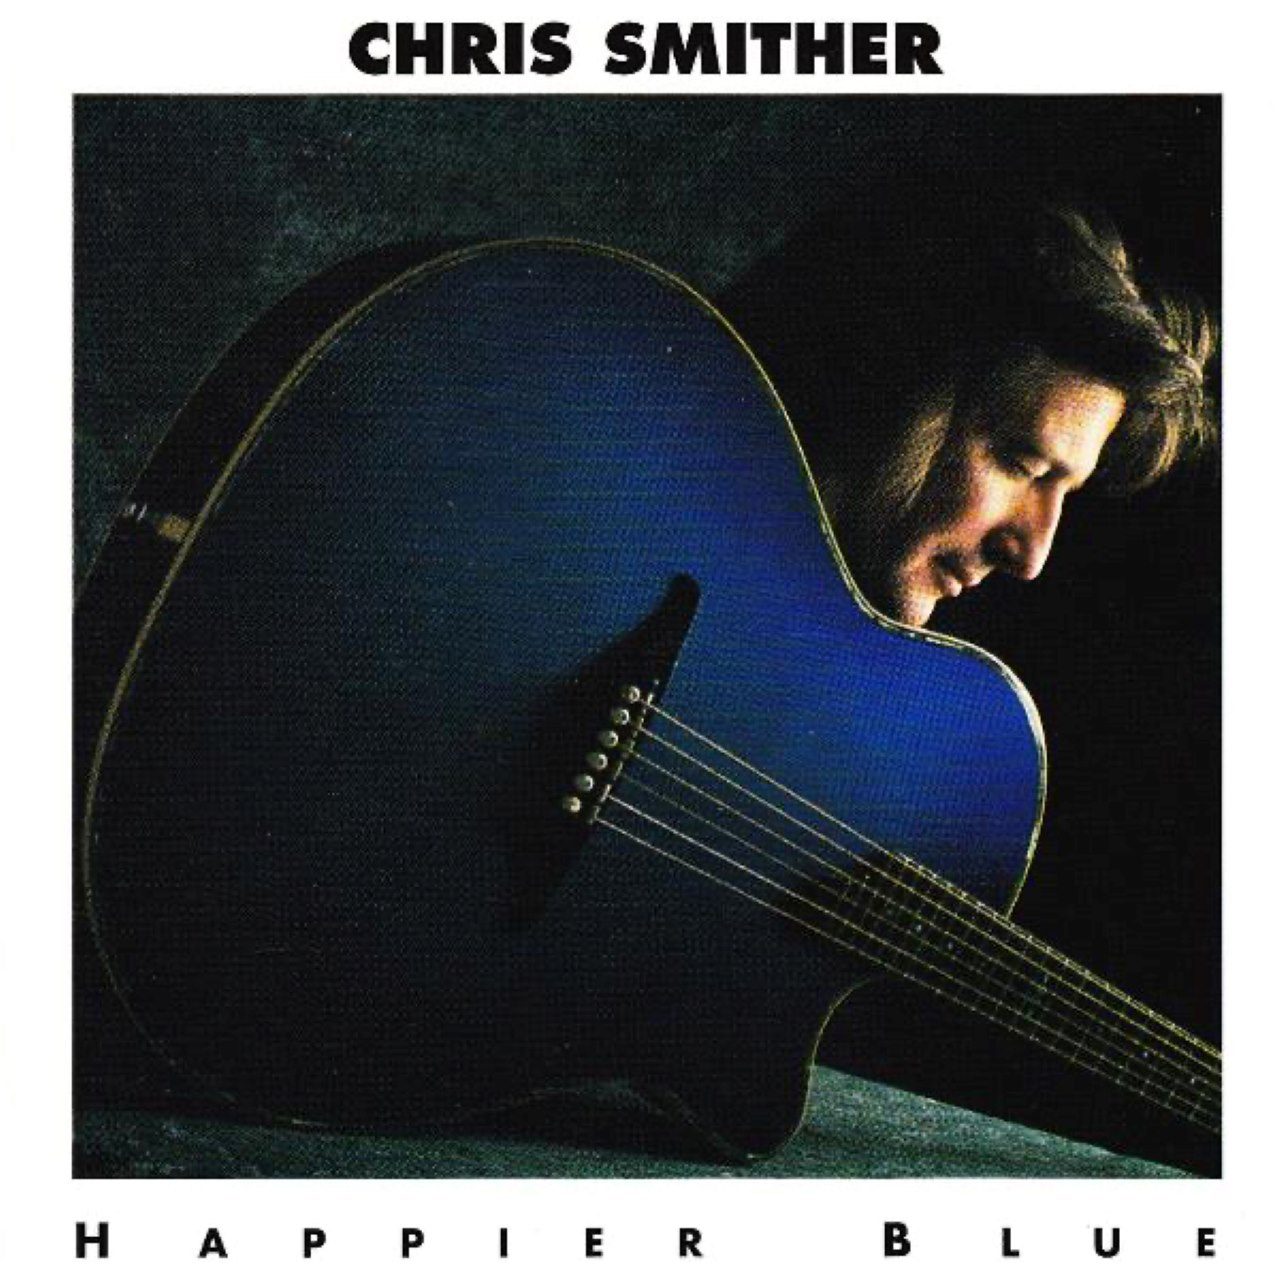 Chris Smither – Happier Blue cover album